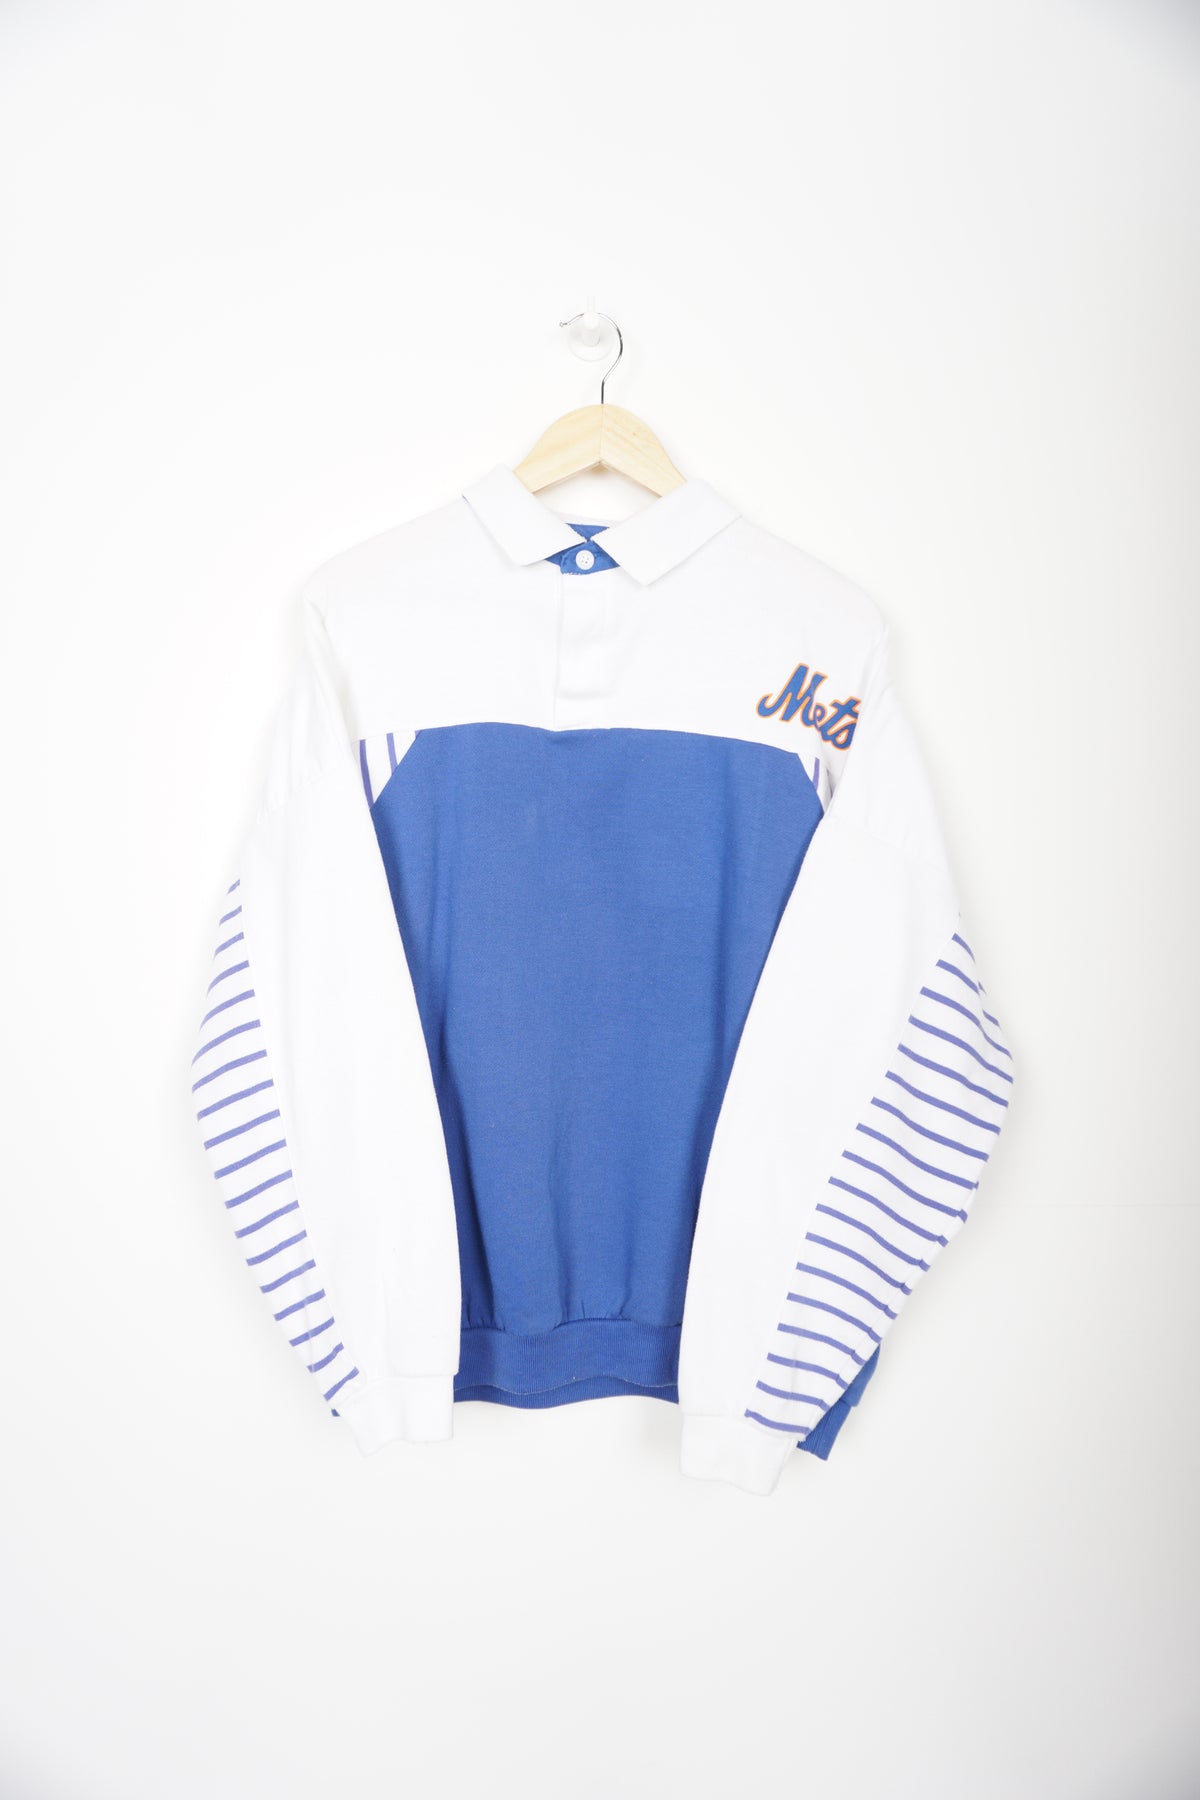 MLB Genuine Merchandise New York Mets Youth Long Sleeve T-Shirt Size L  14-16